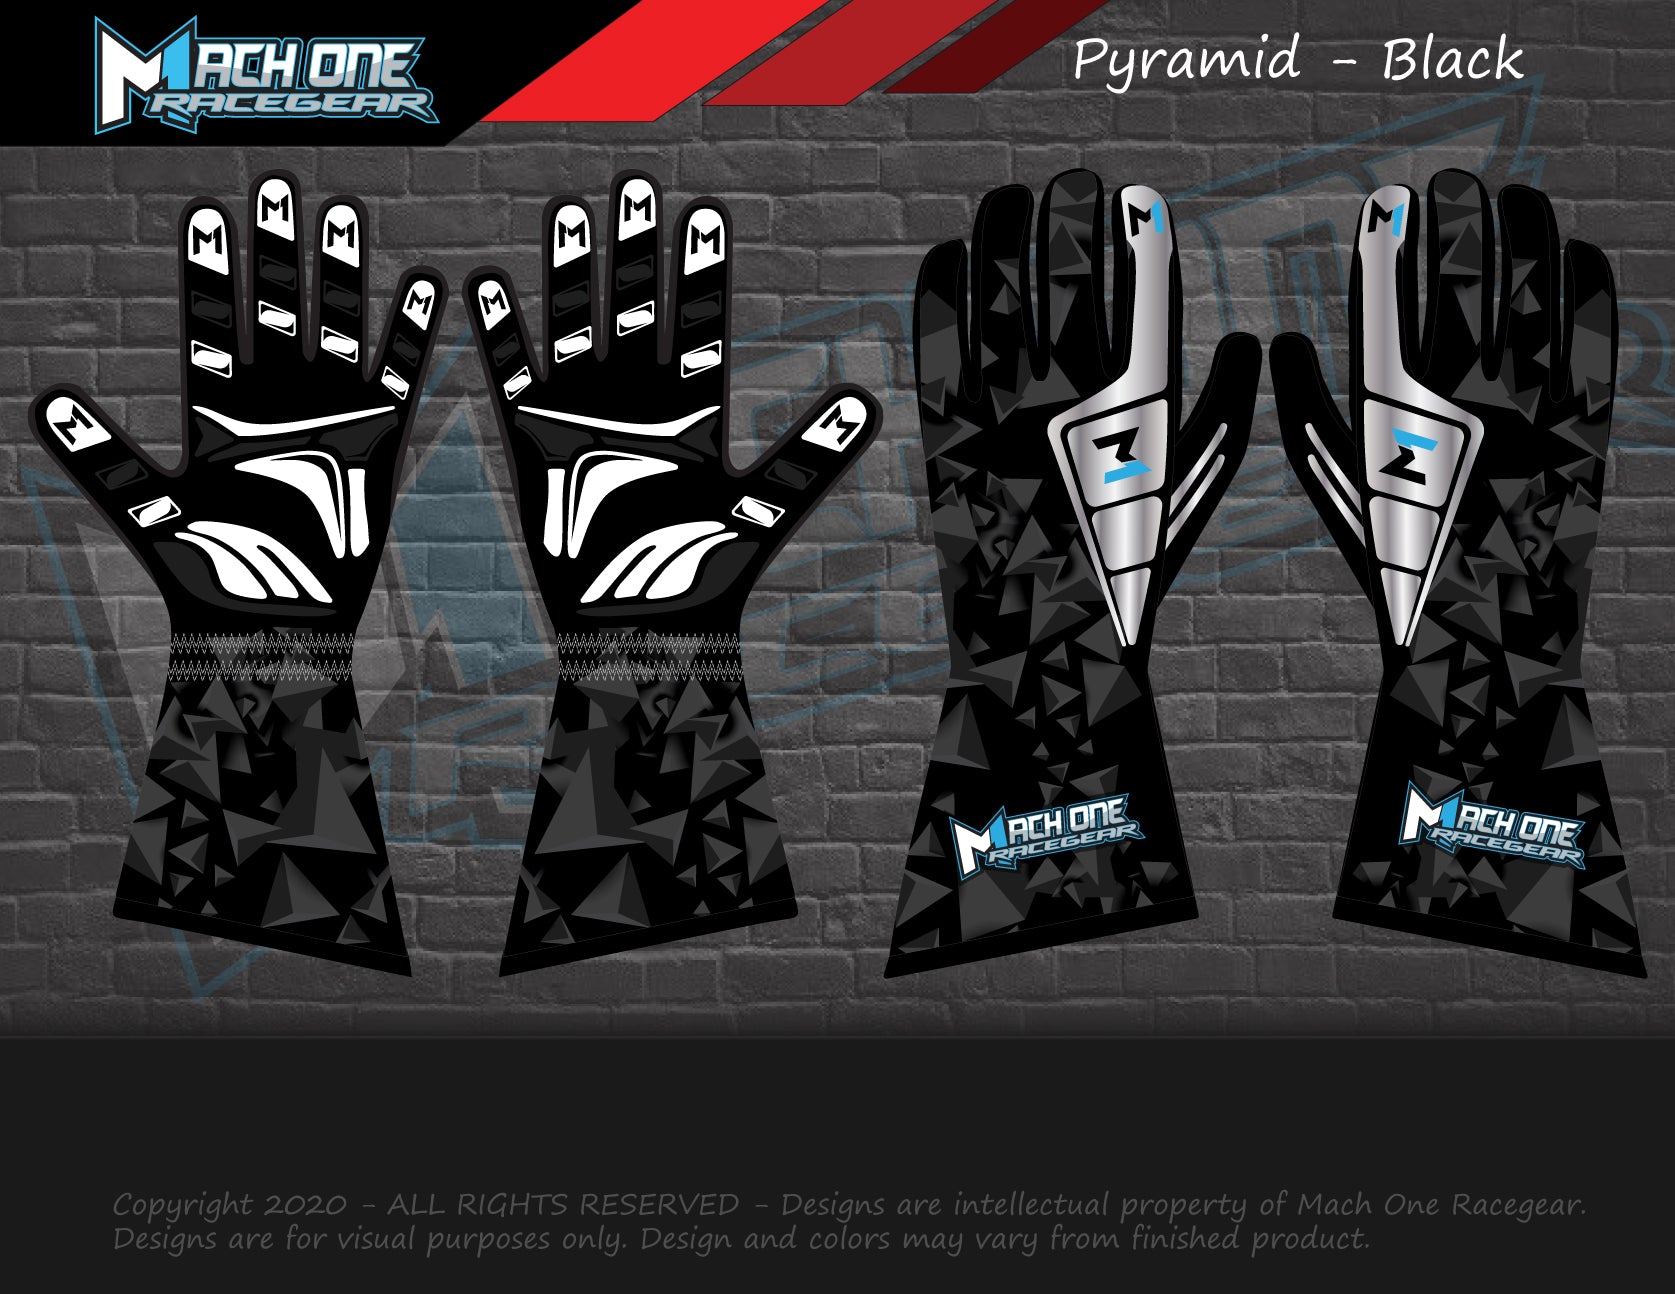 OPLITE Simracing Gloves Gants de Protection Karting Simulation Course  Gaming Noir Taille M 22,4 x 10,5 cm